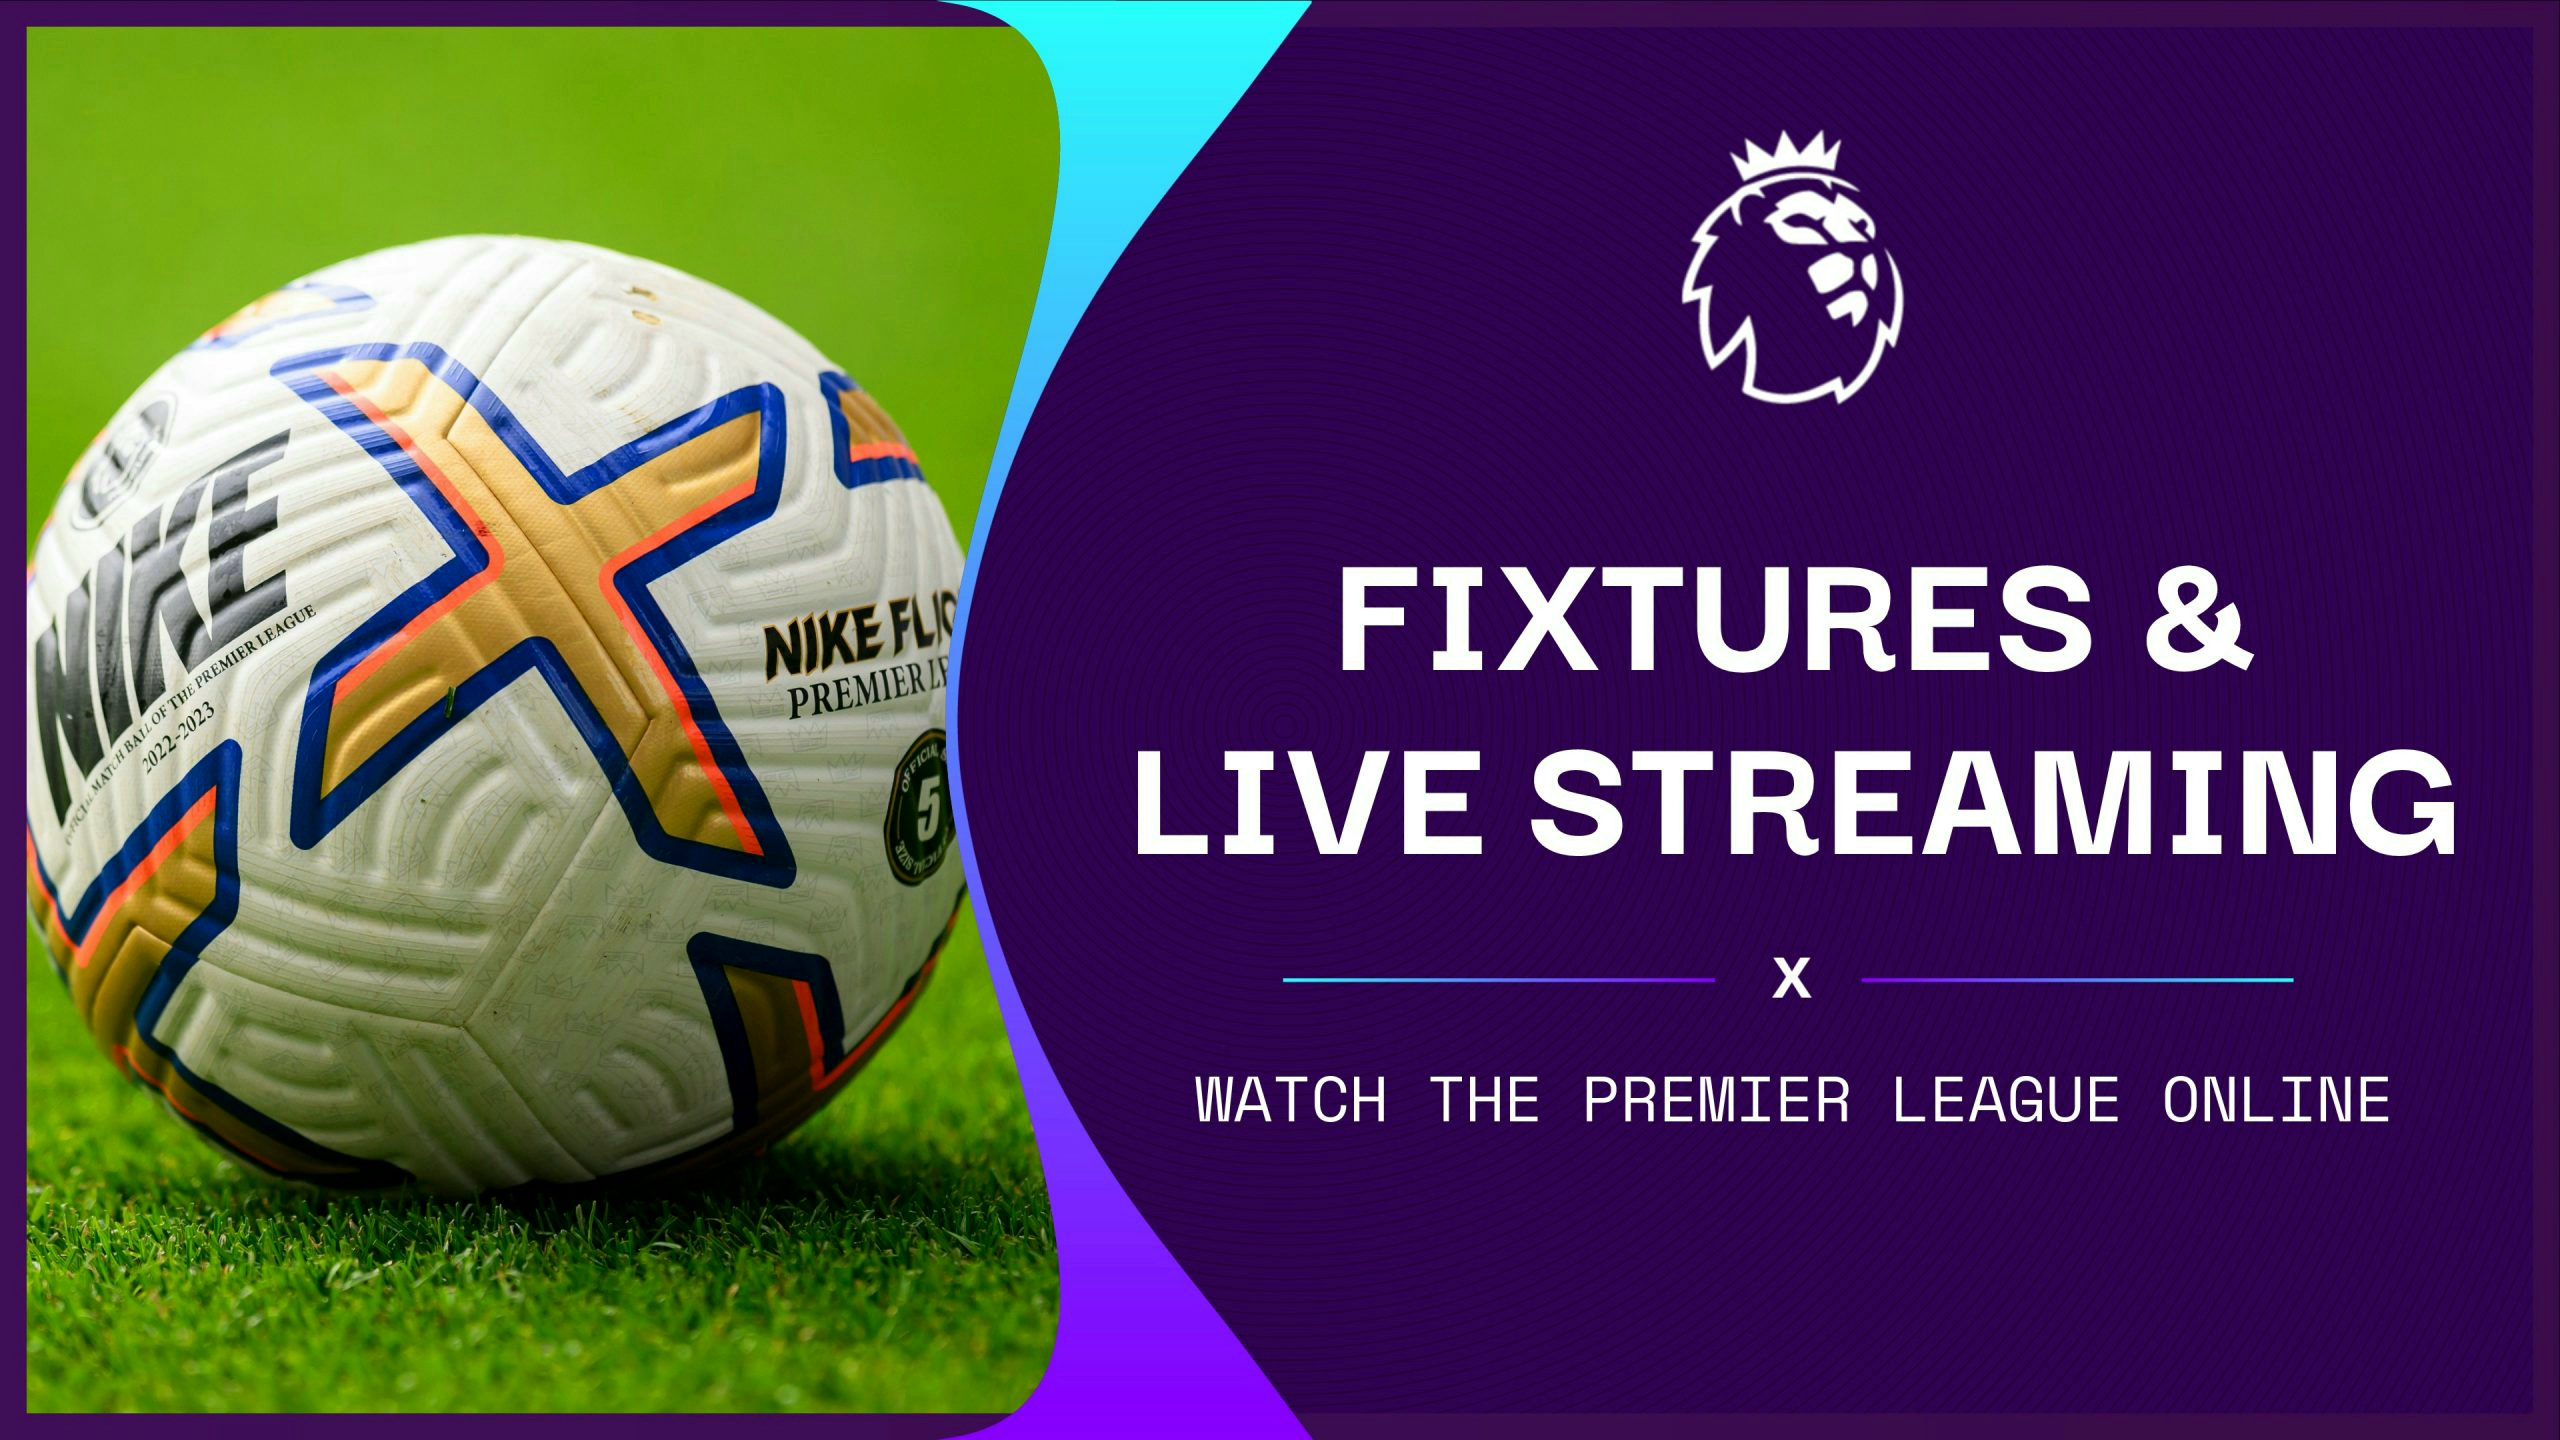 EPL Football Livestream Links (Match Day September 30)- Arsenal VS Bournemouth, MAN UTD vs Crystal Palace, Many More.